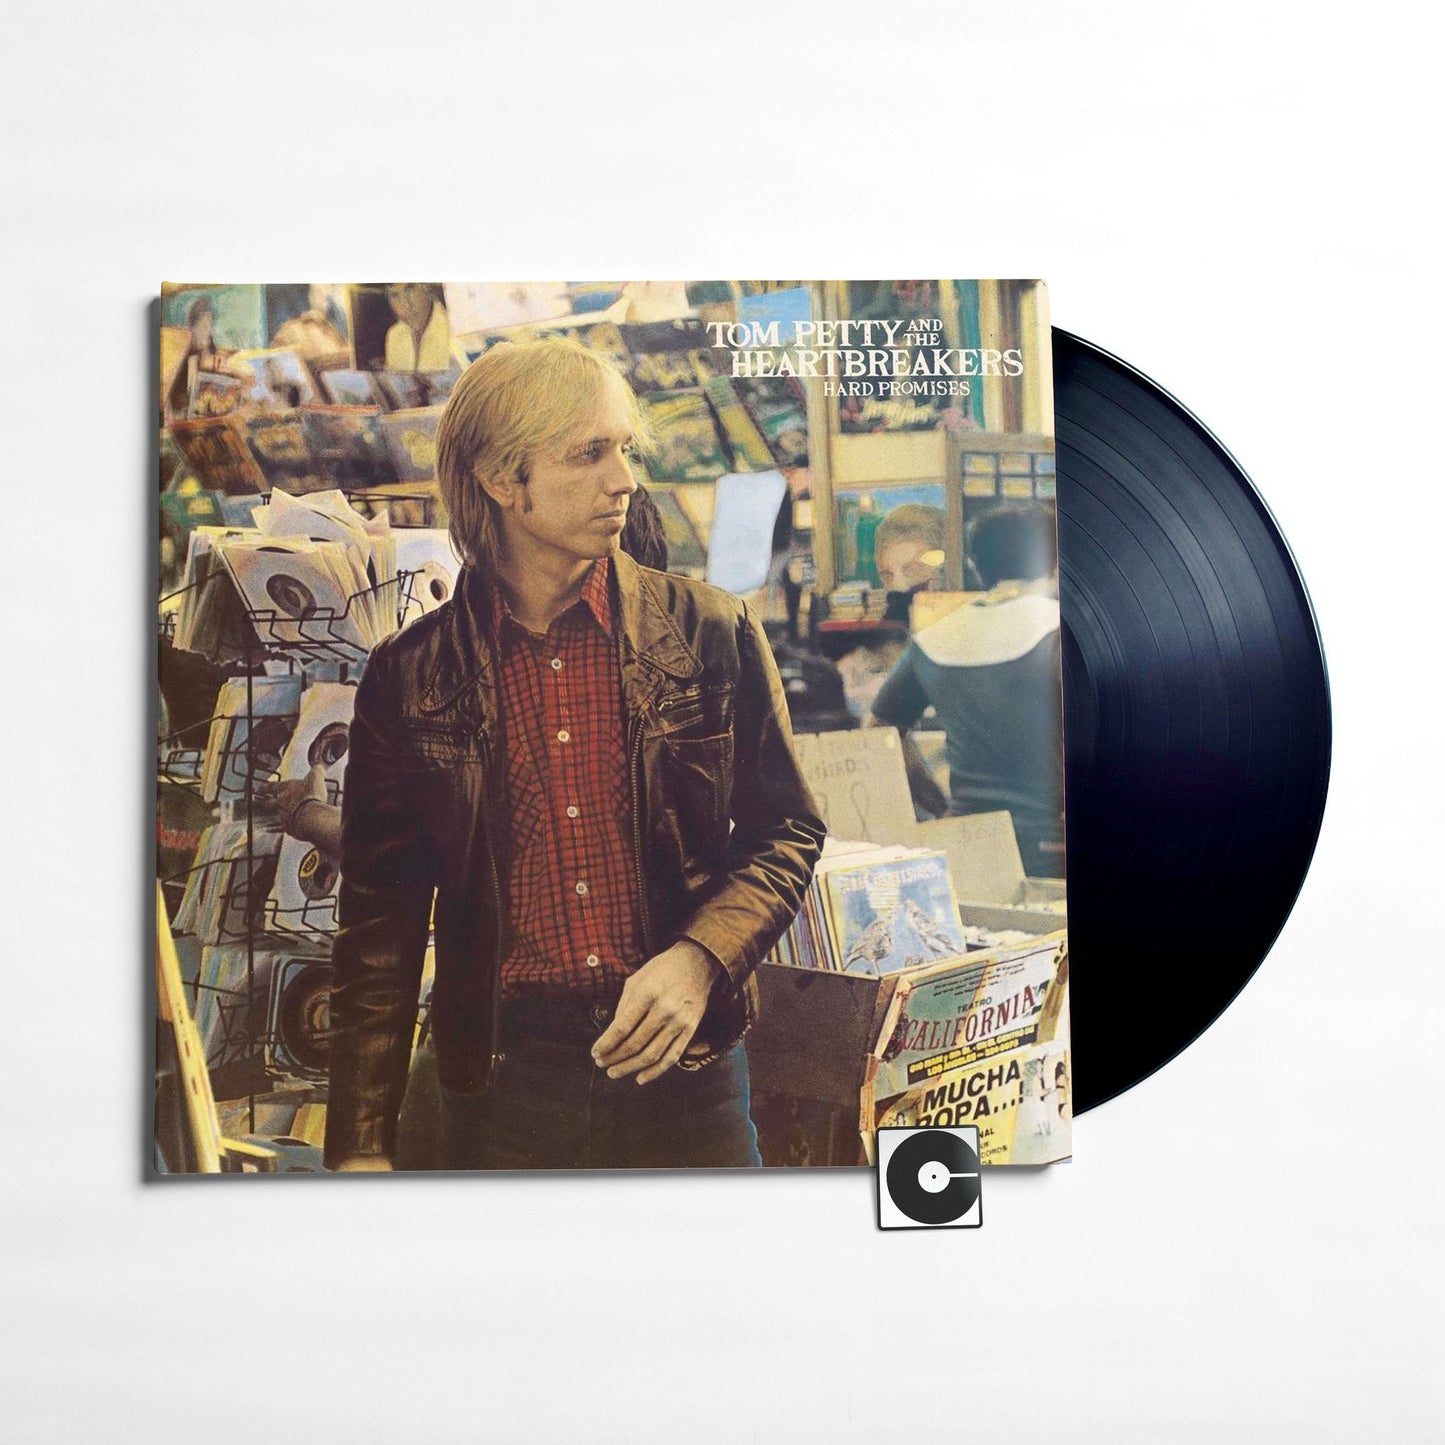 Tom Petty & The Heartbreakers - "Hard Promises"